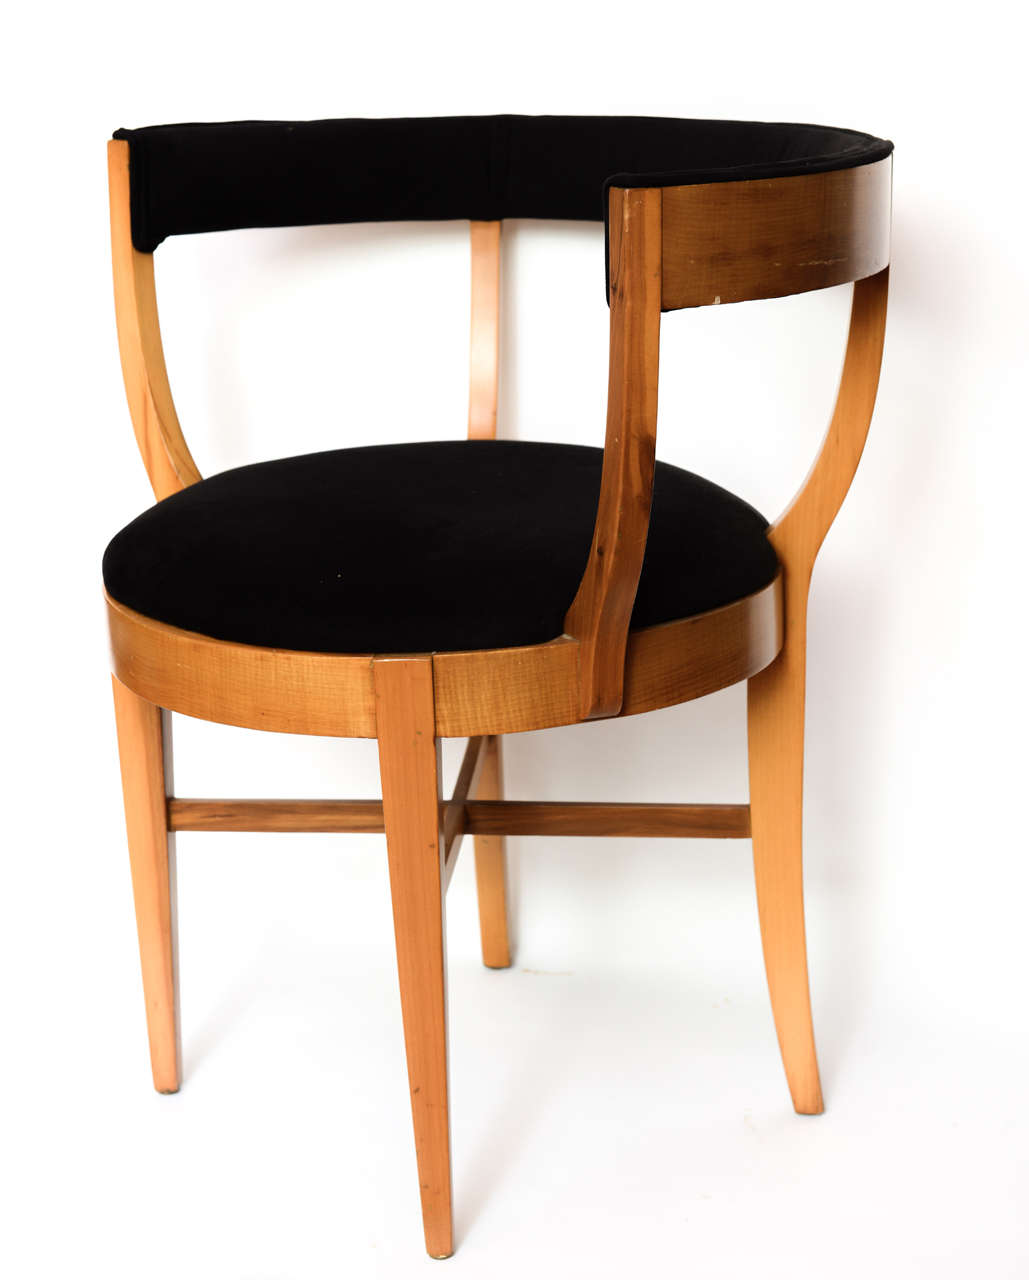 20th Century American Art Deco Chair  SATURDAY SALE